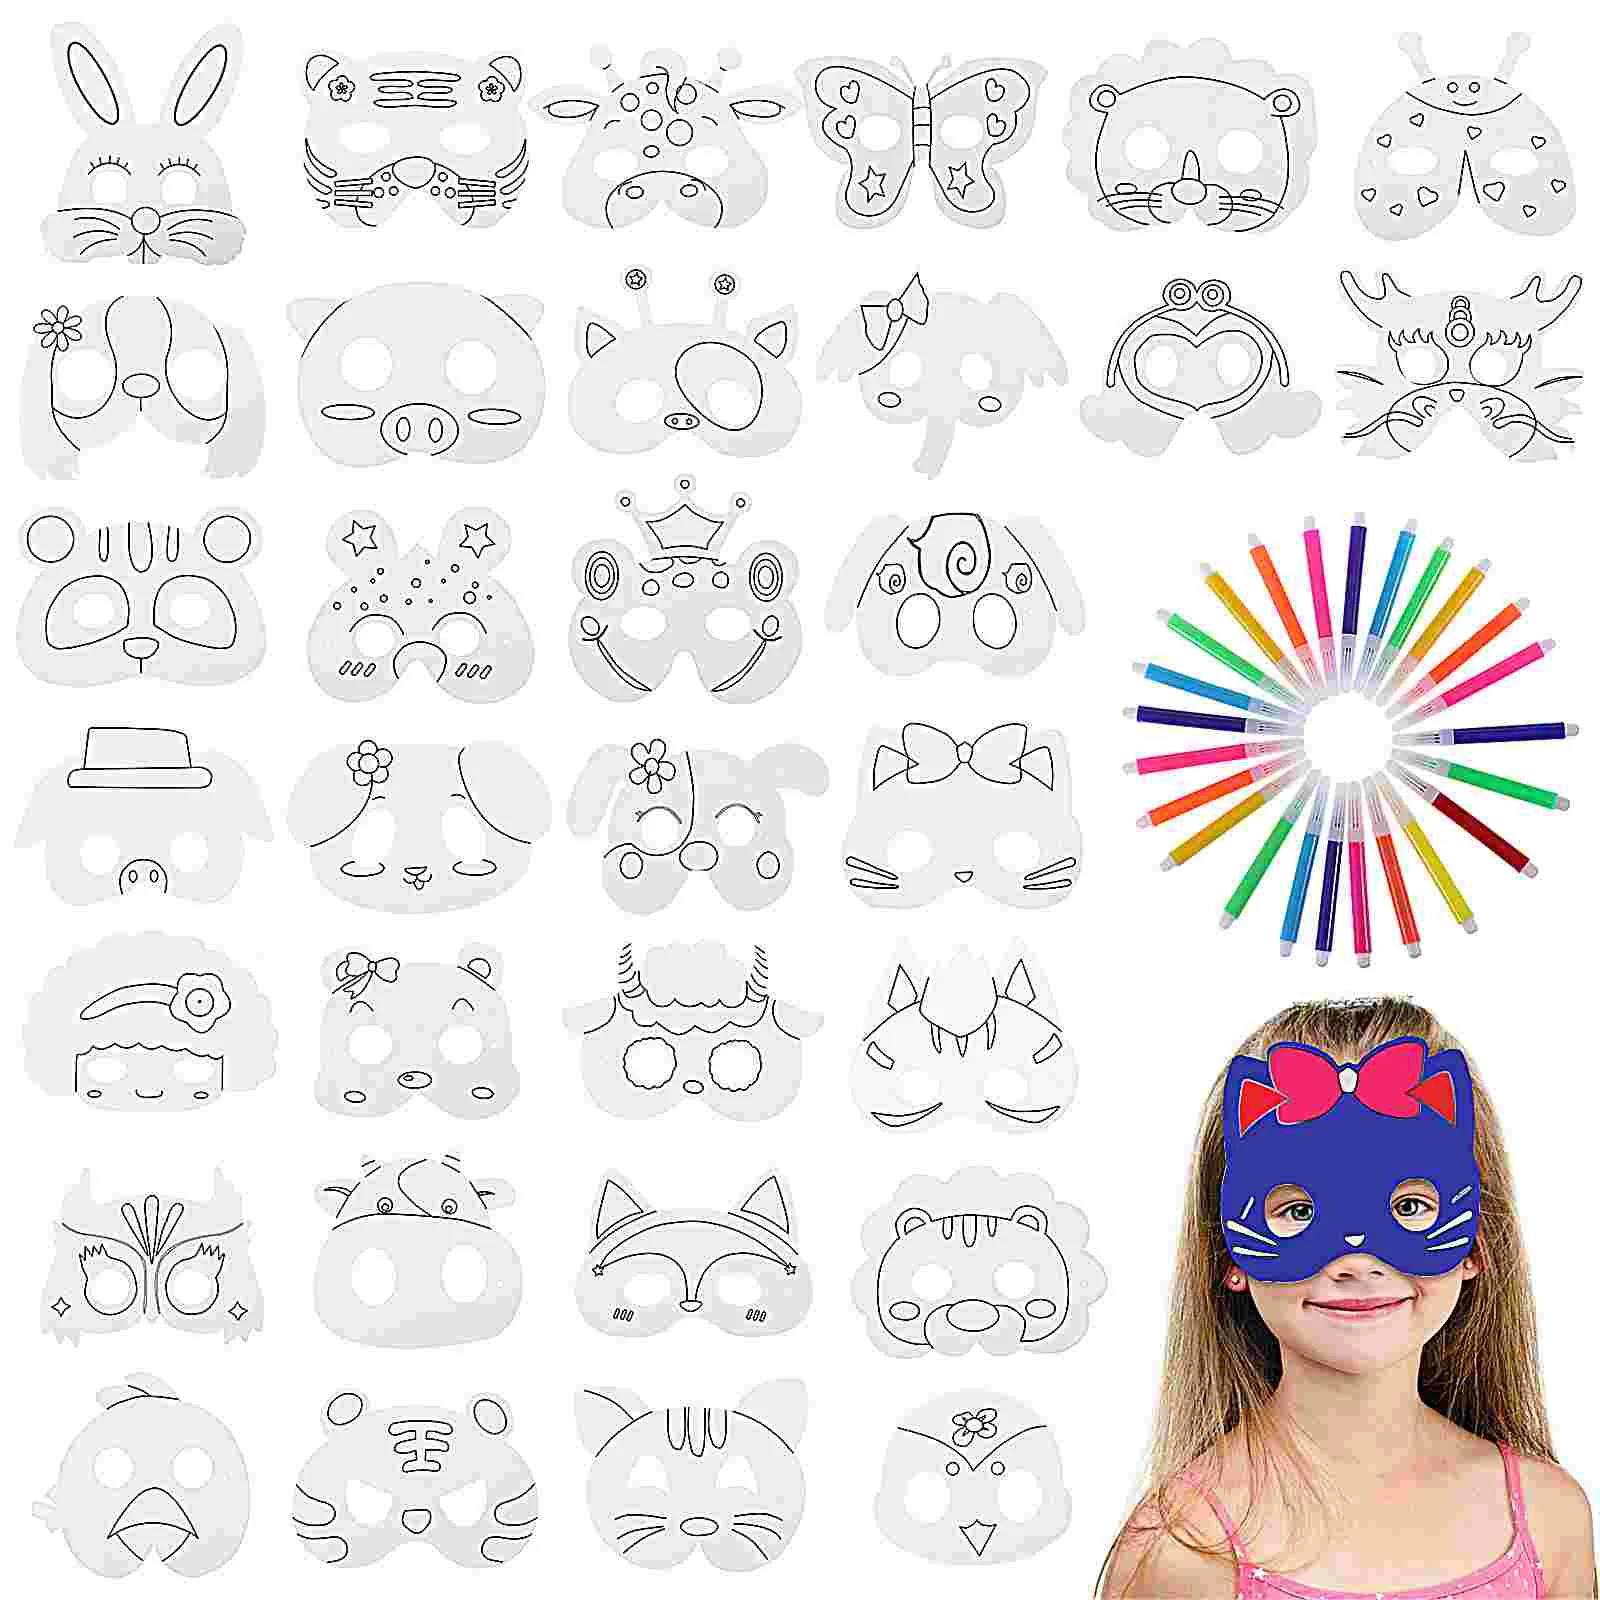 

1 Set Blank Masks DIY Craft Mask Animal Masks Coloring Masks for Party Masquerade Cosplay Party